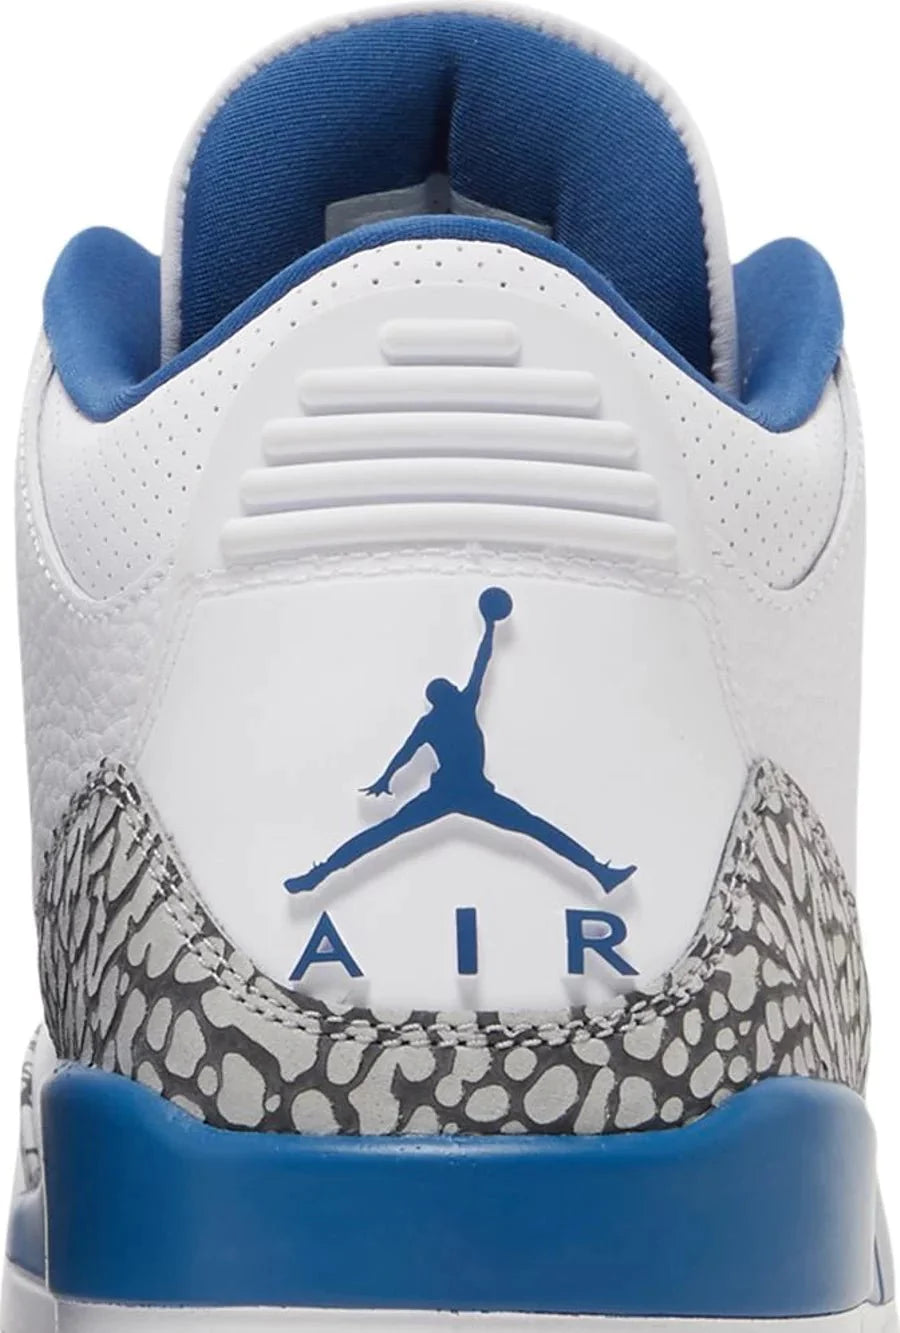 Jordan Air Jordan 3 Retro Wizards True Blue Mens Lifestyle Shoes